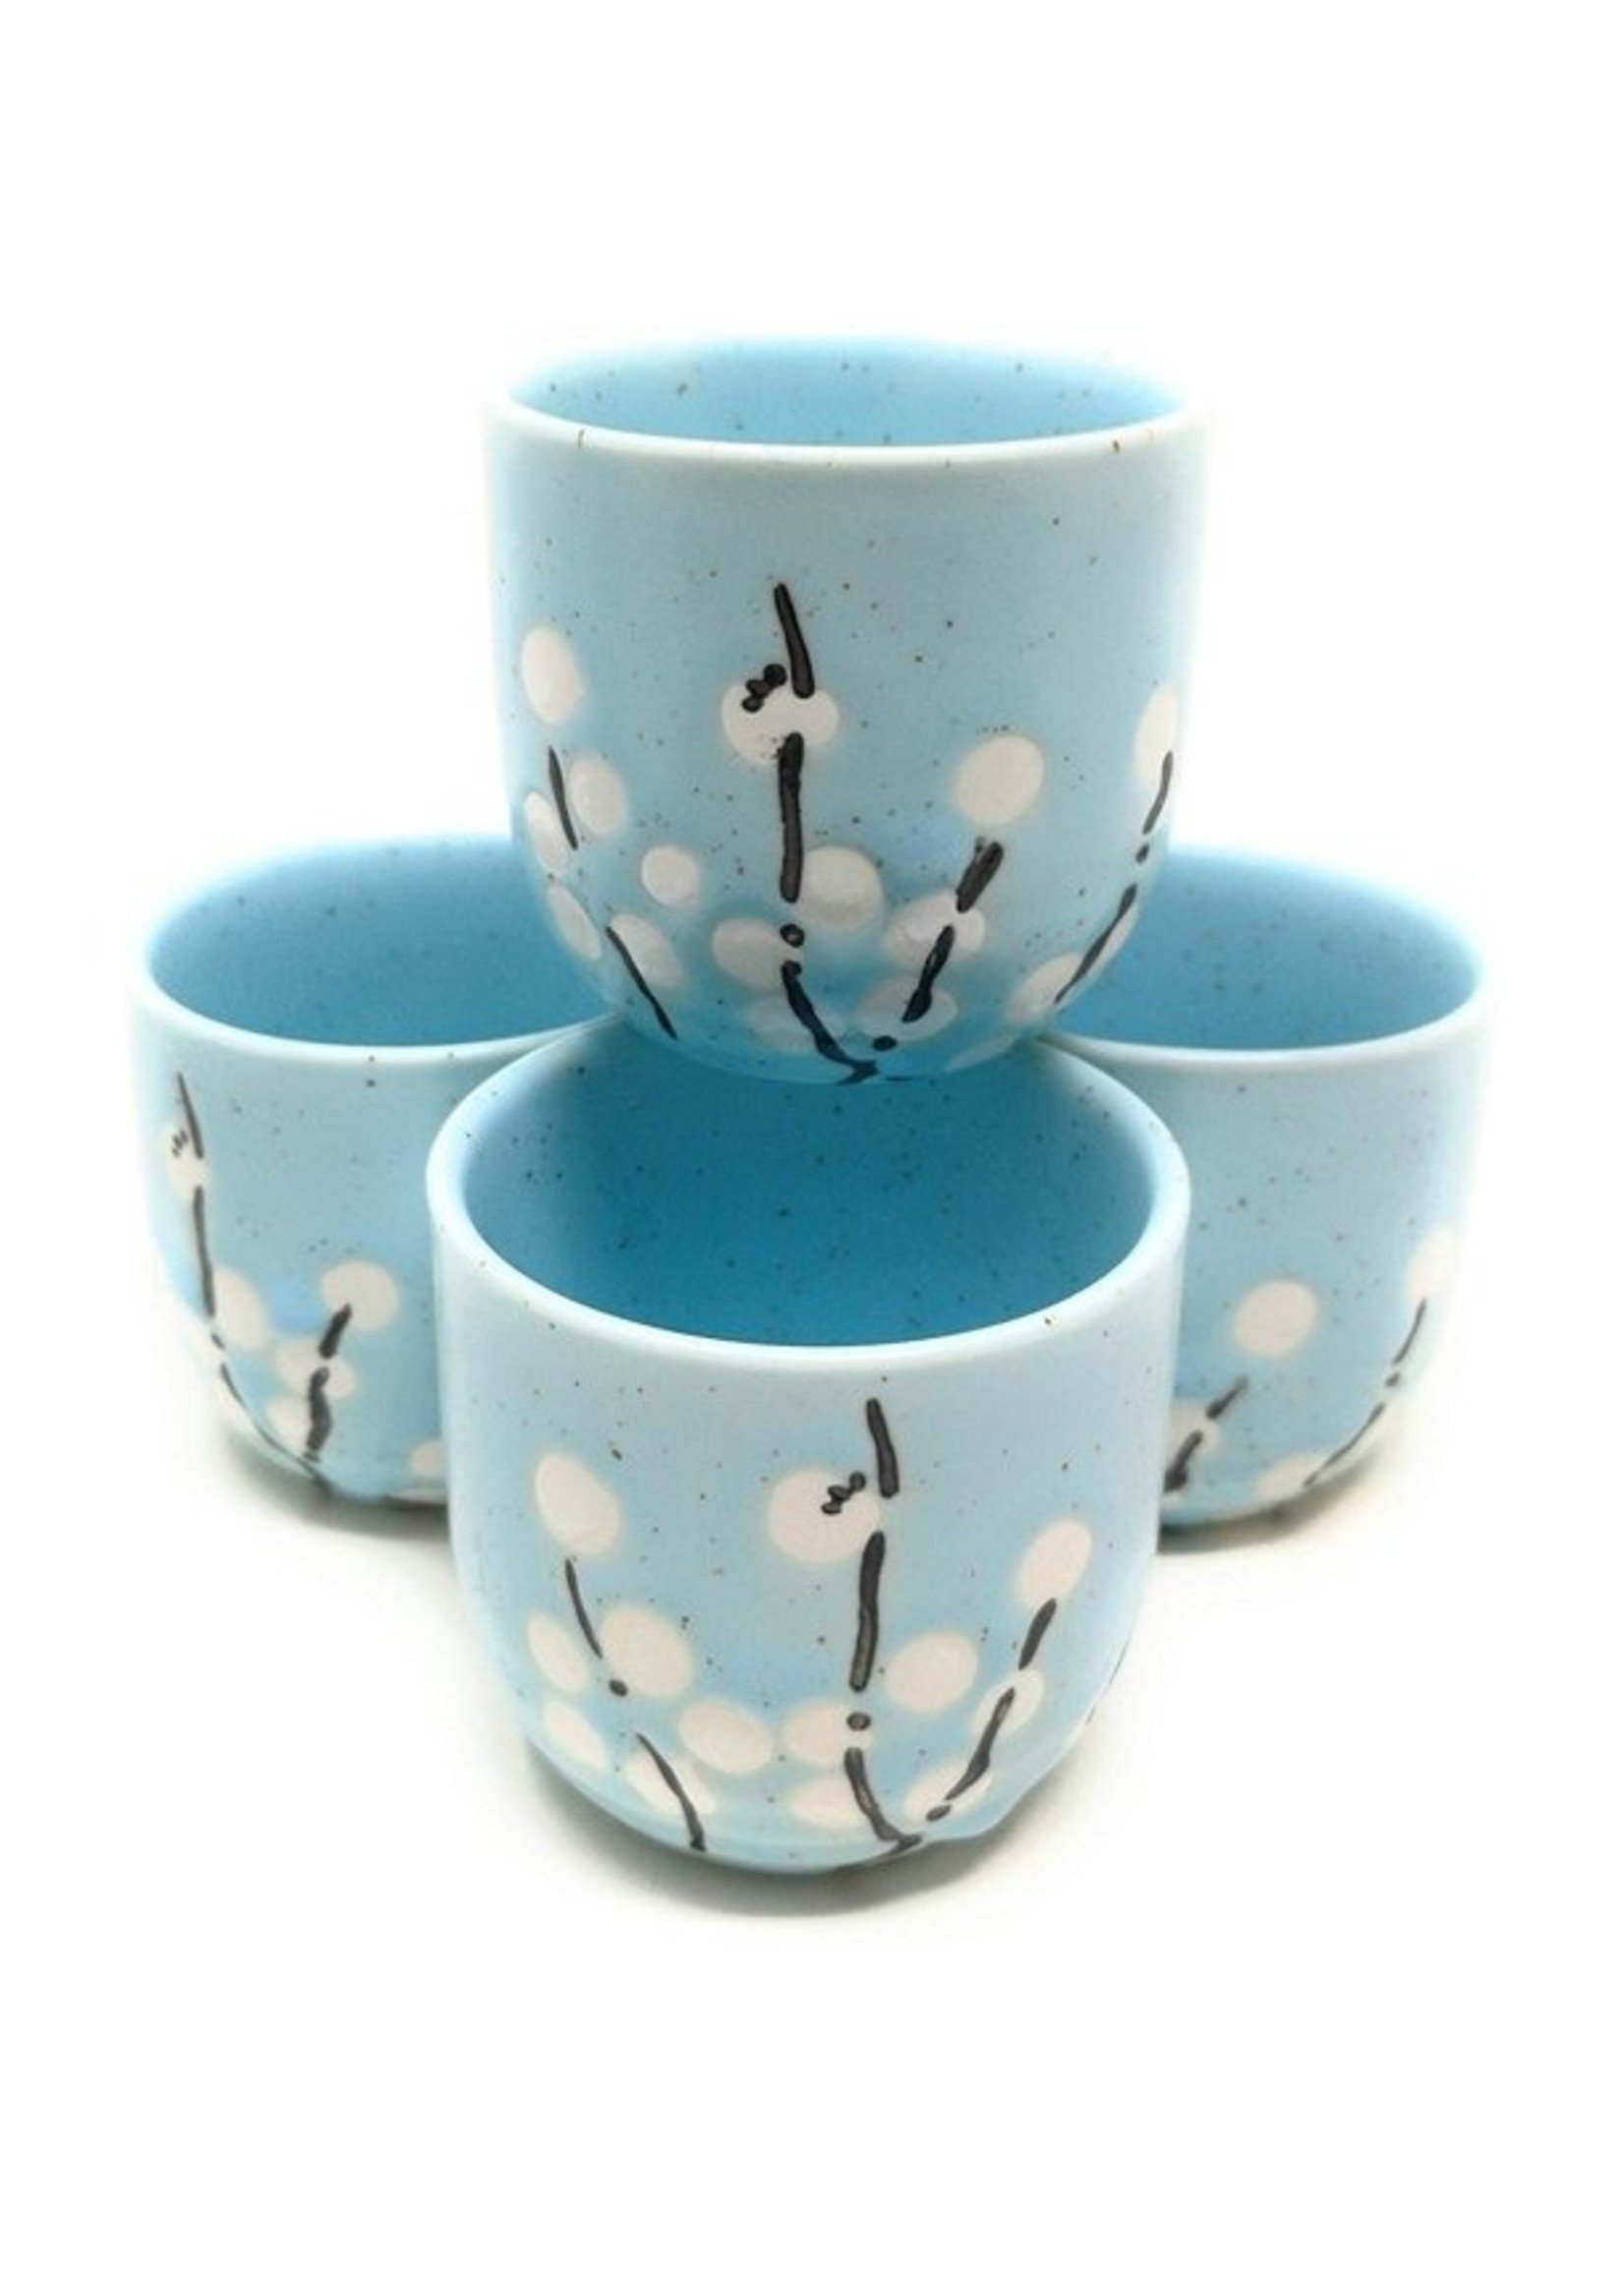 Sake Pot Set - Blue with White Blossoms 5 Piece set - Elysian Fields